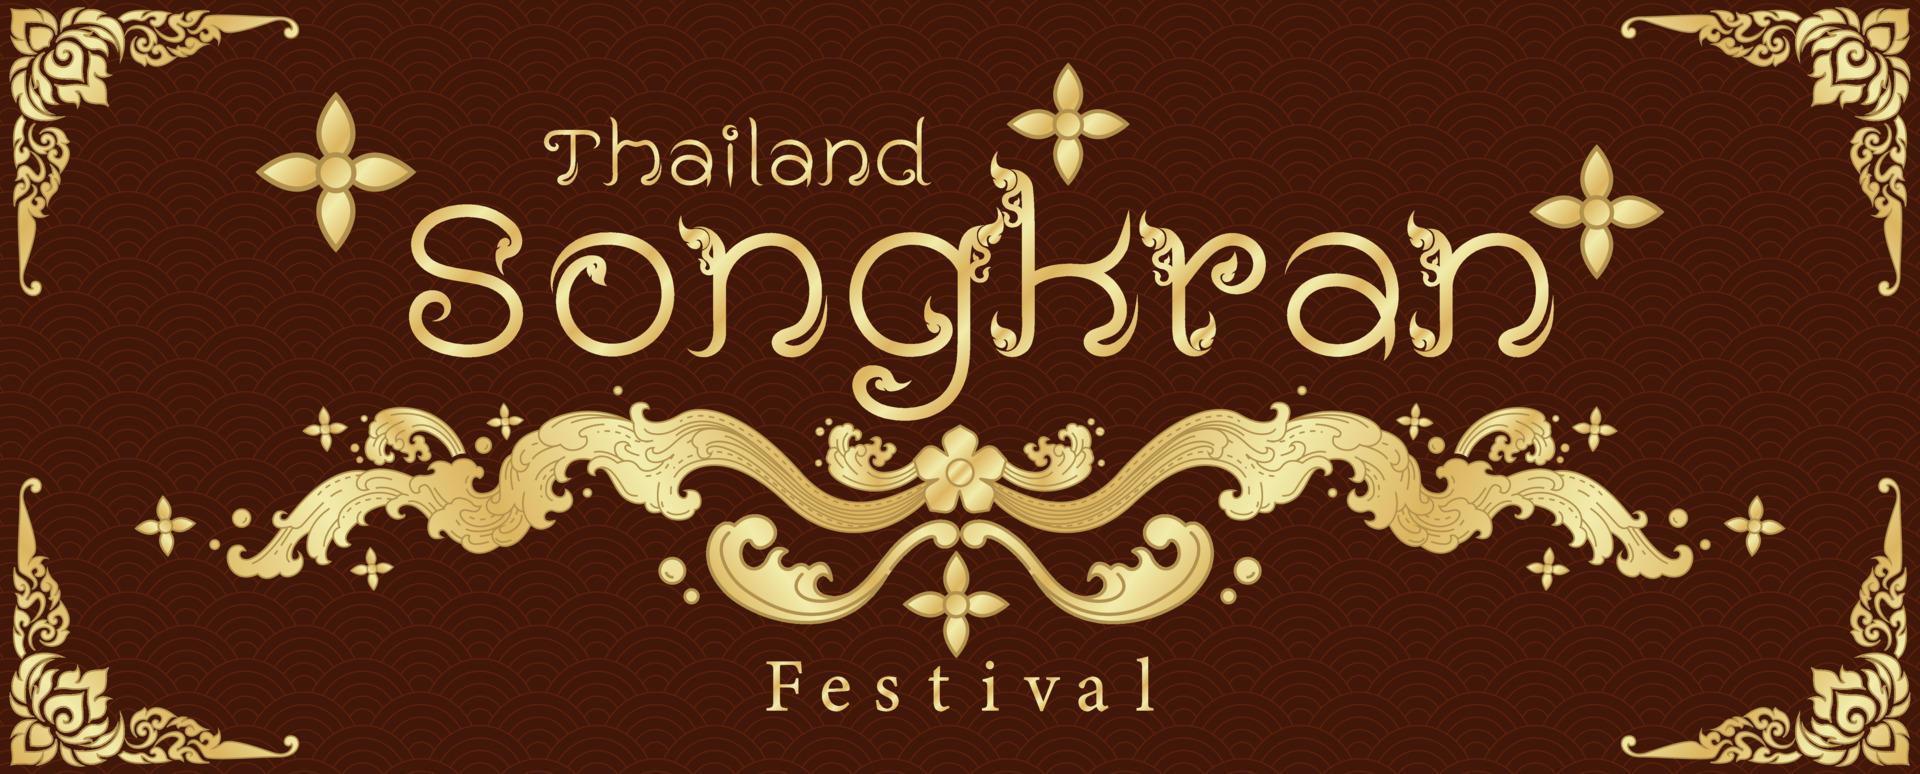 póster de Tailandia Songkran festival en tradicional dorado tailandés modelo estilo con el nombre de evento en marrón antecedentes. vector